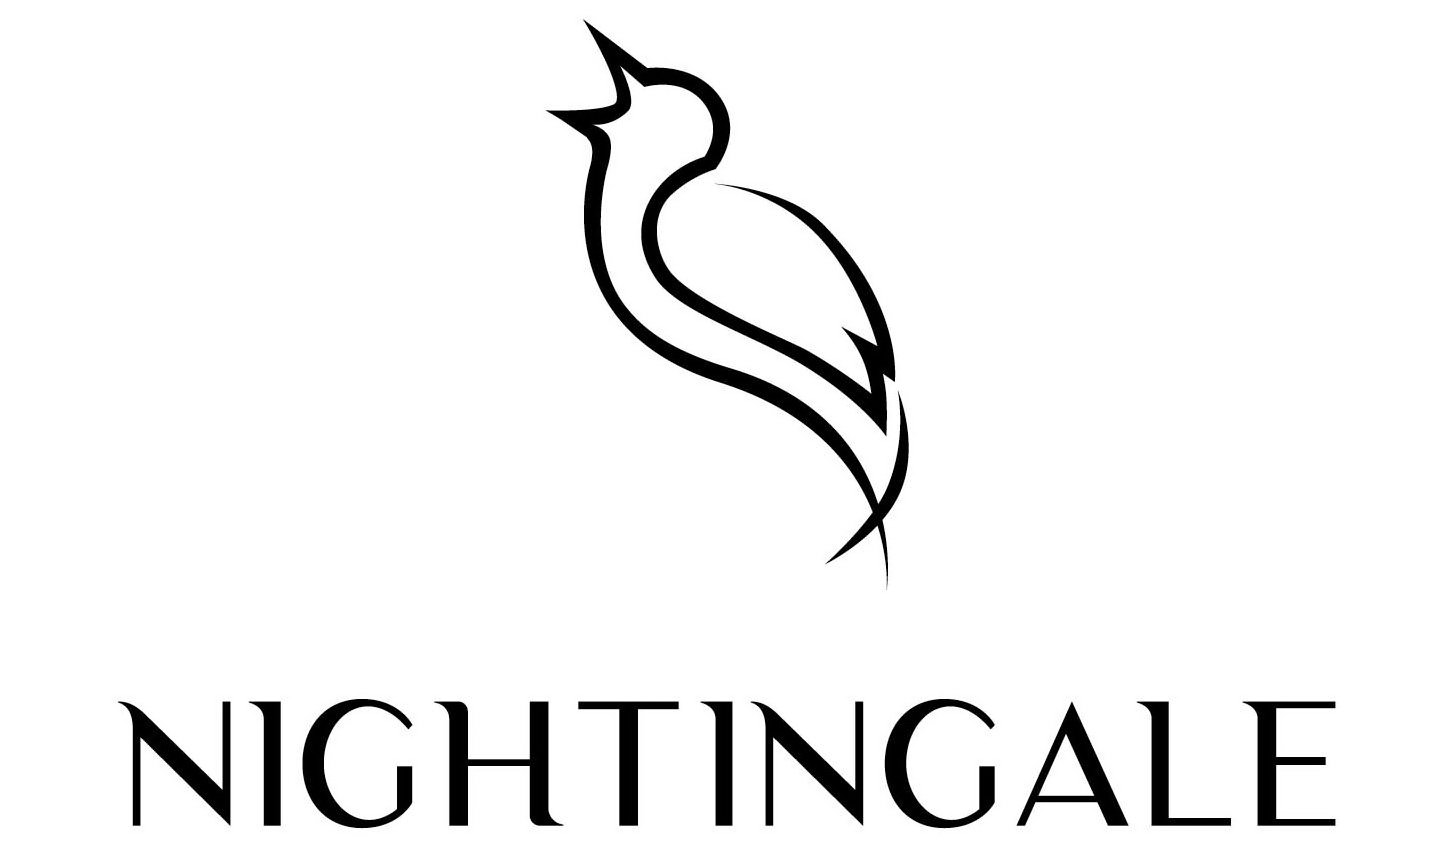 Trademark Logo NIGHTINGALE